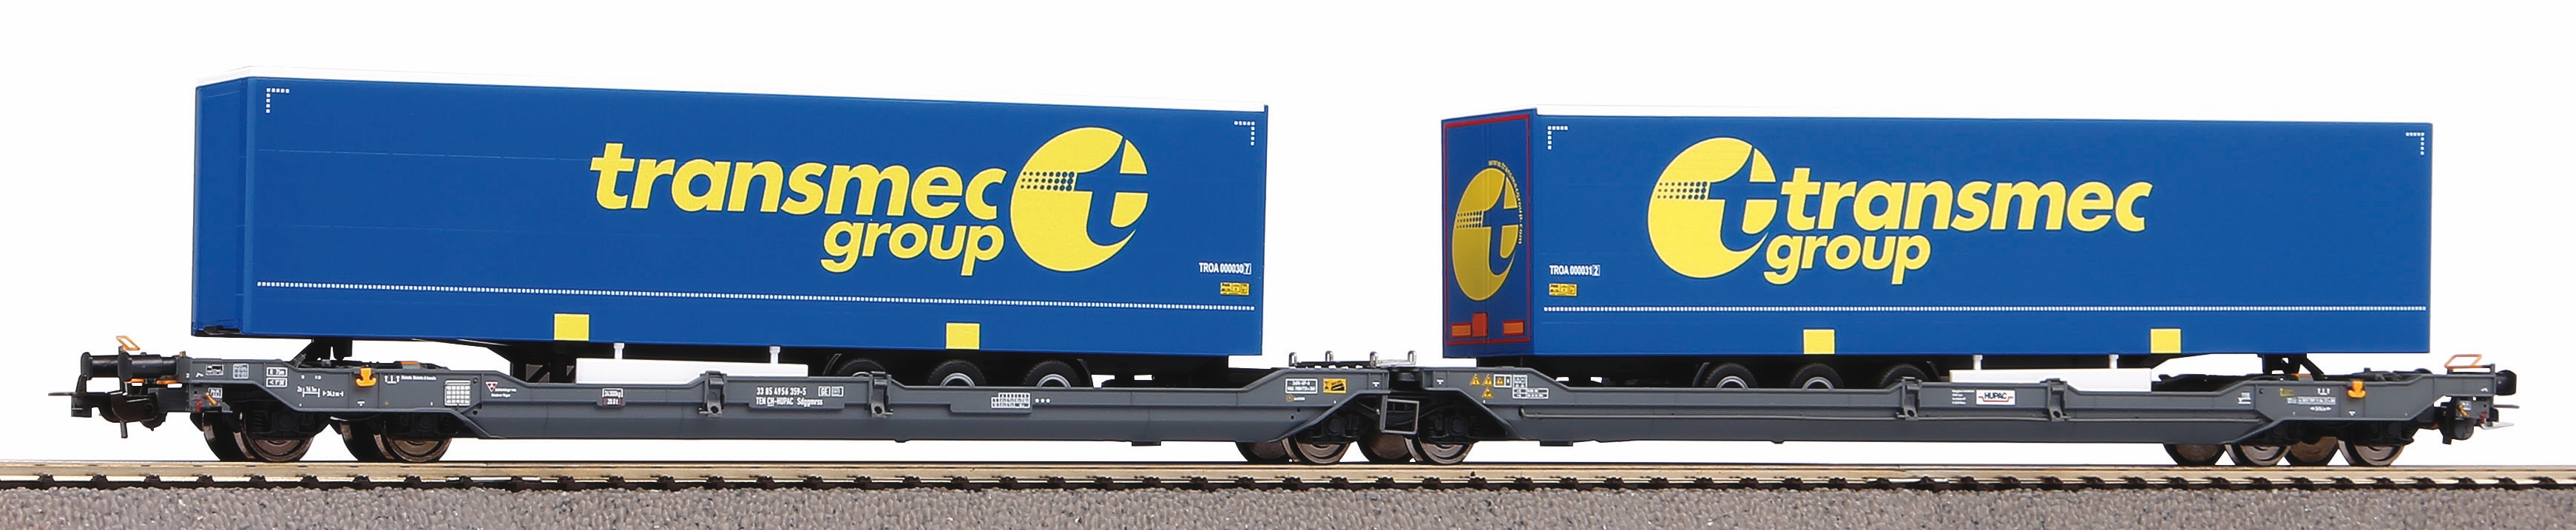 piko-58971-Taschenwagen-T3000e-transmec-group-trailer-Hupac